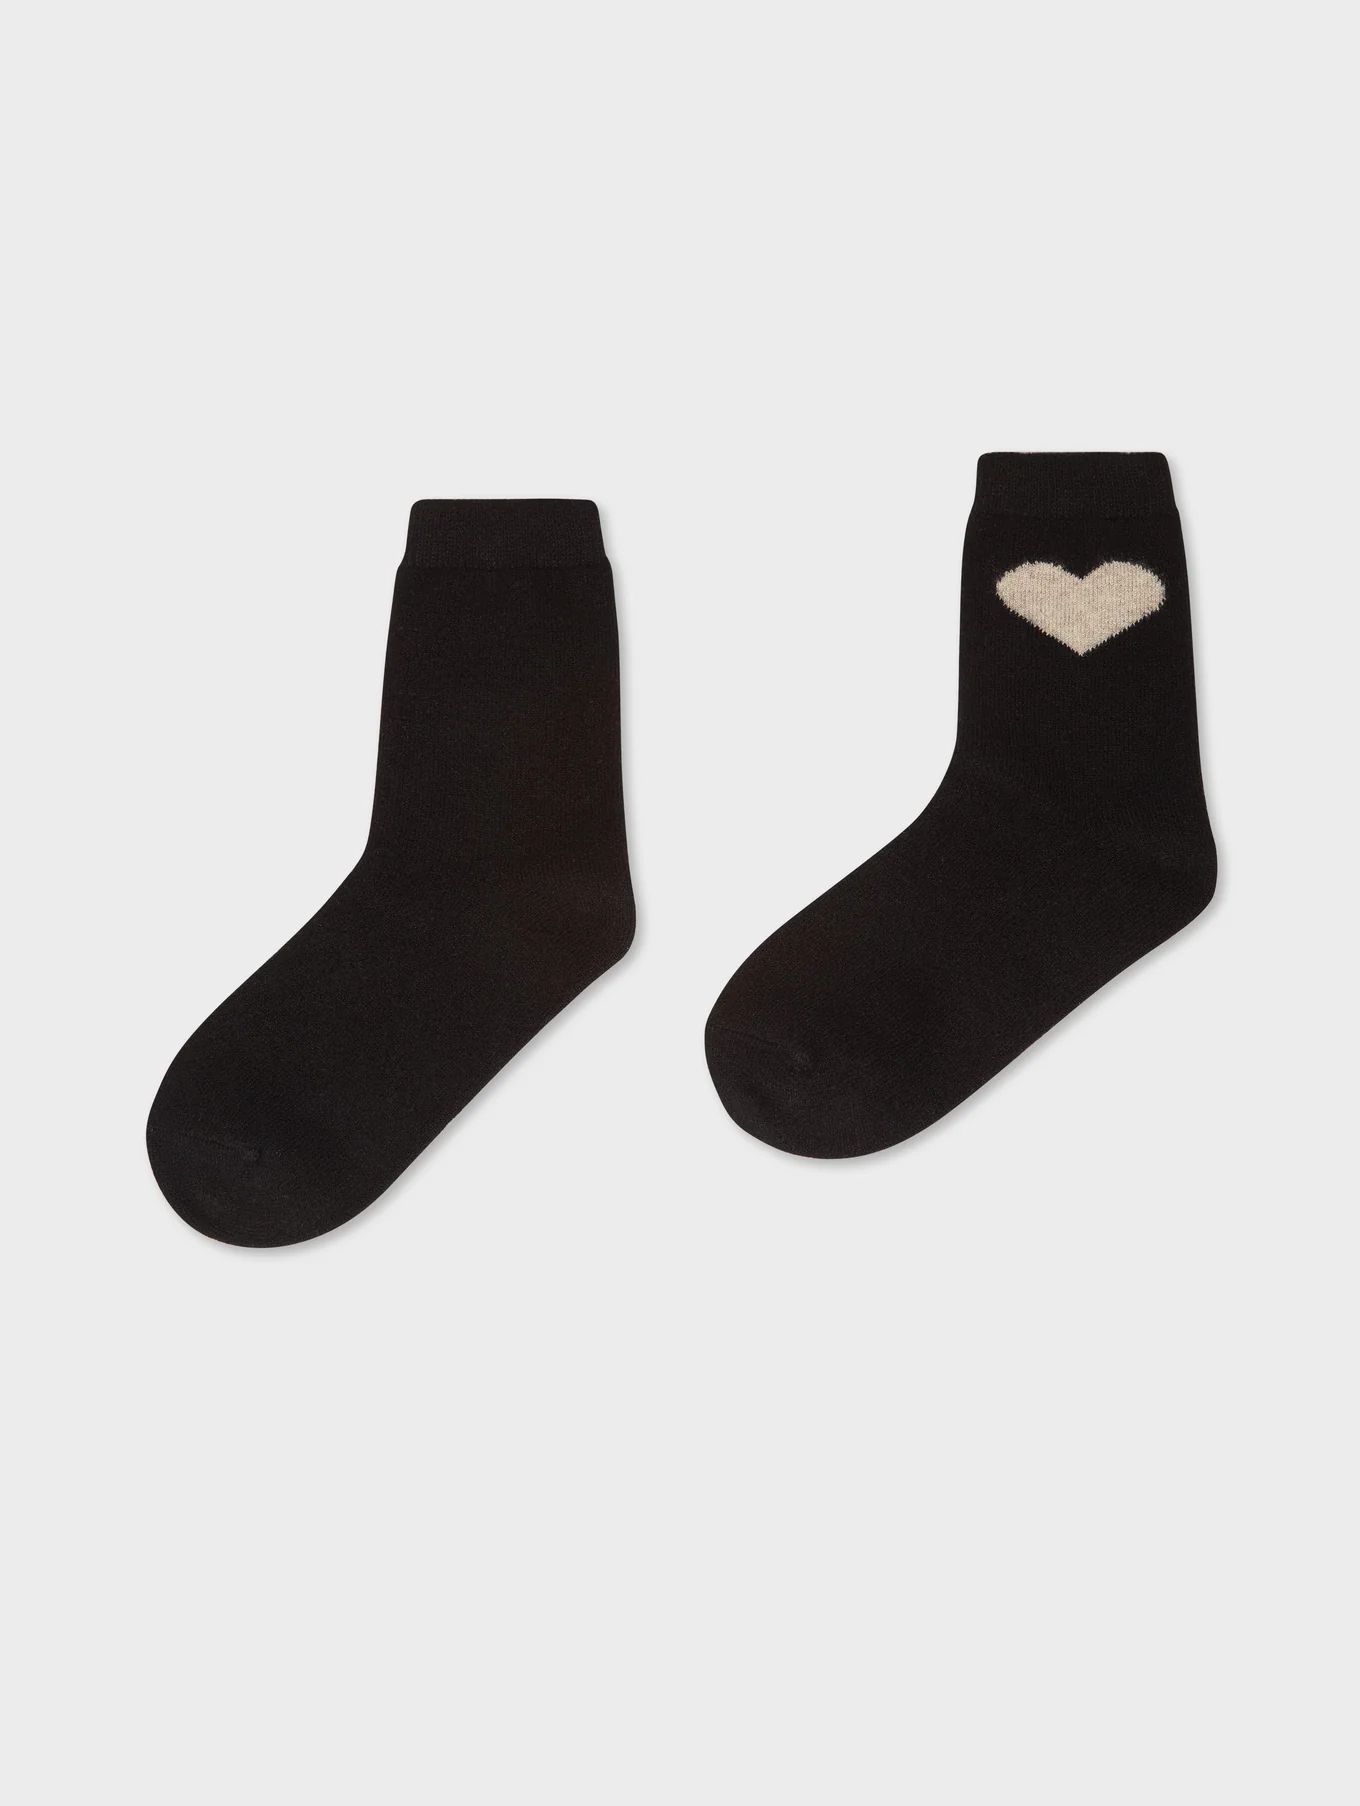 Cashmere Heart Socks | White and Warren